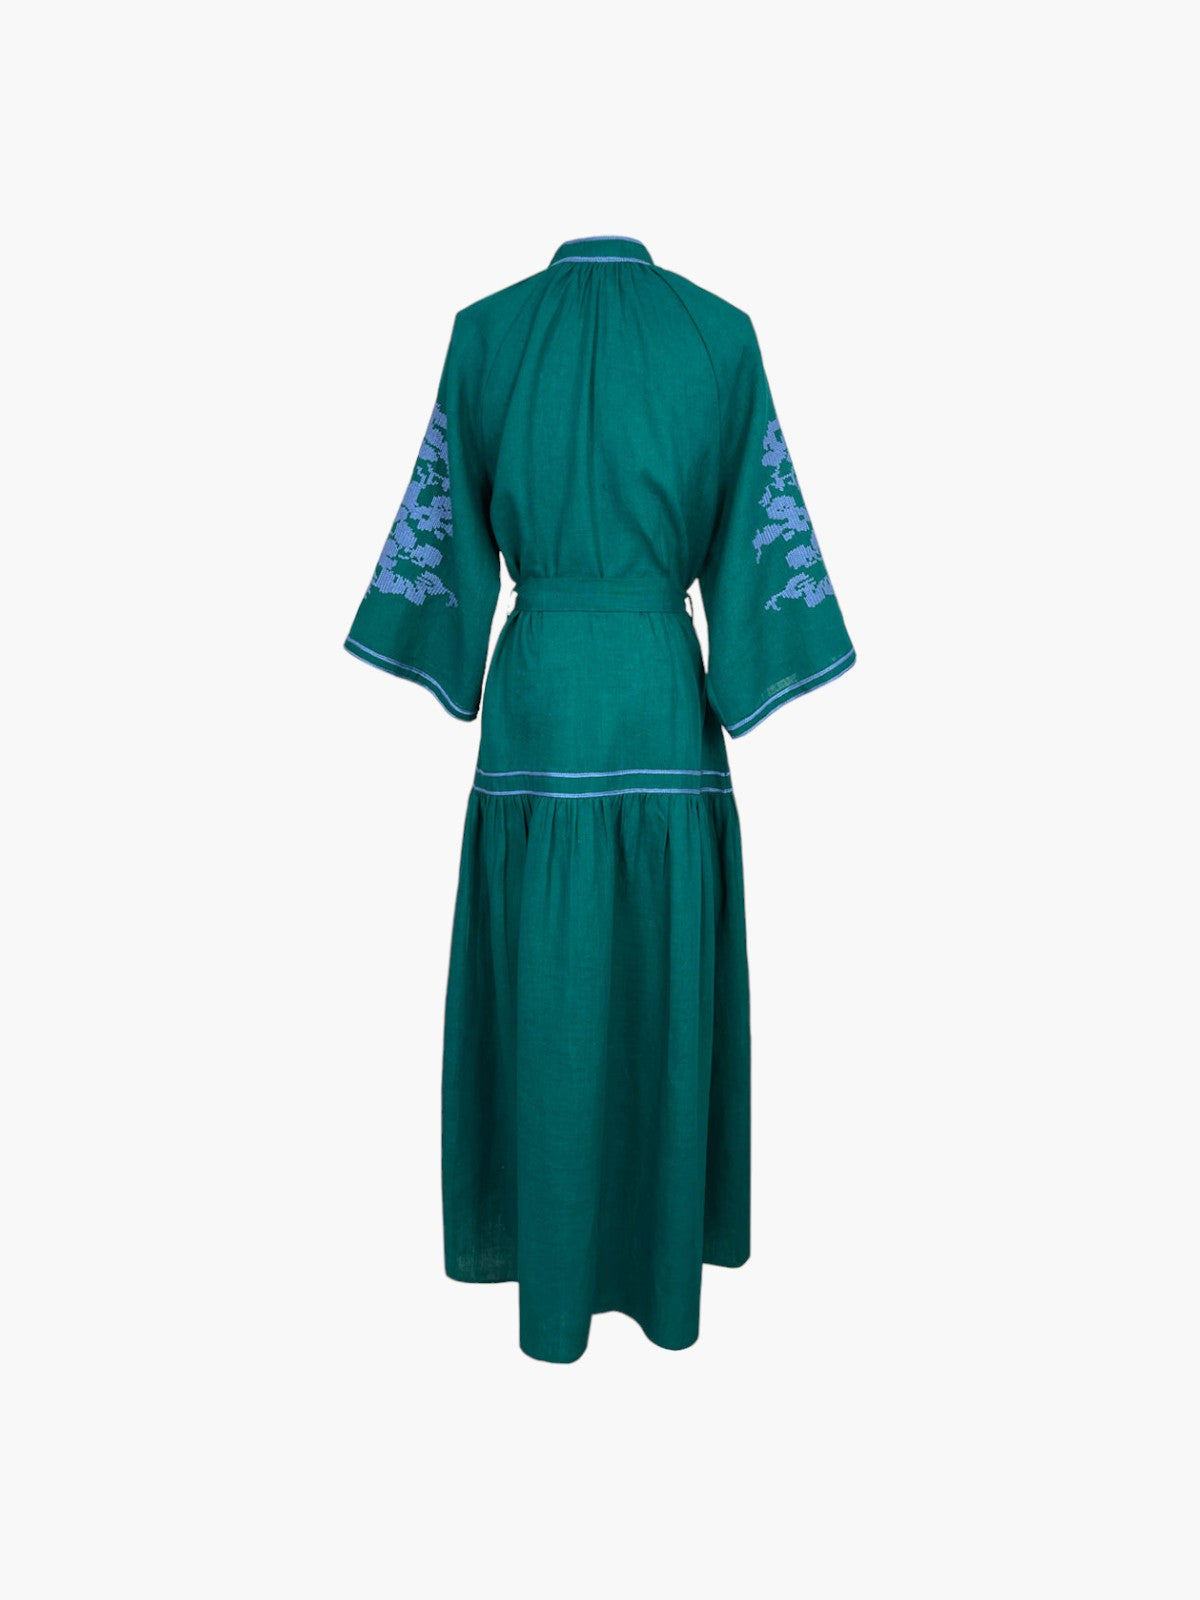 Swan Dress | Emerald Swan Dress | Emerald